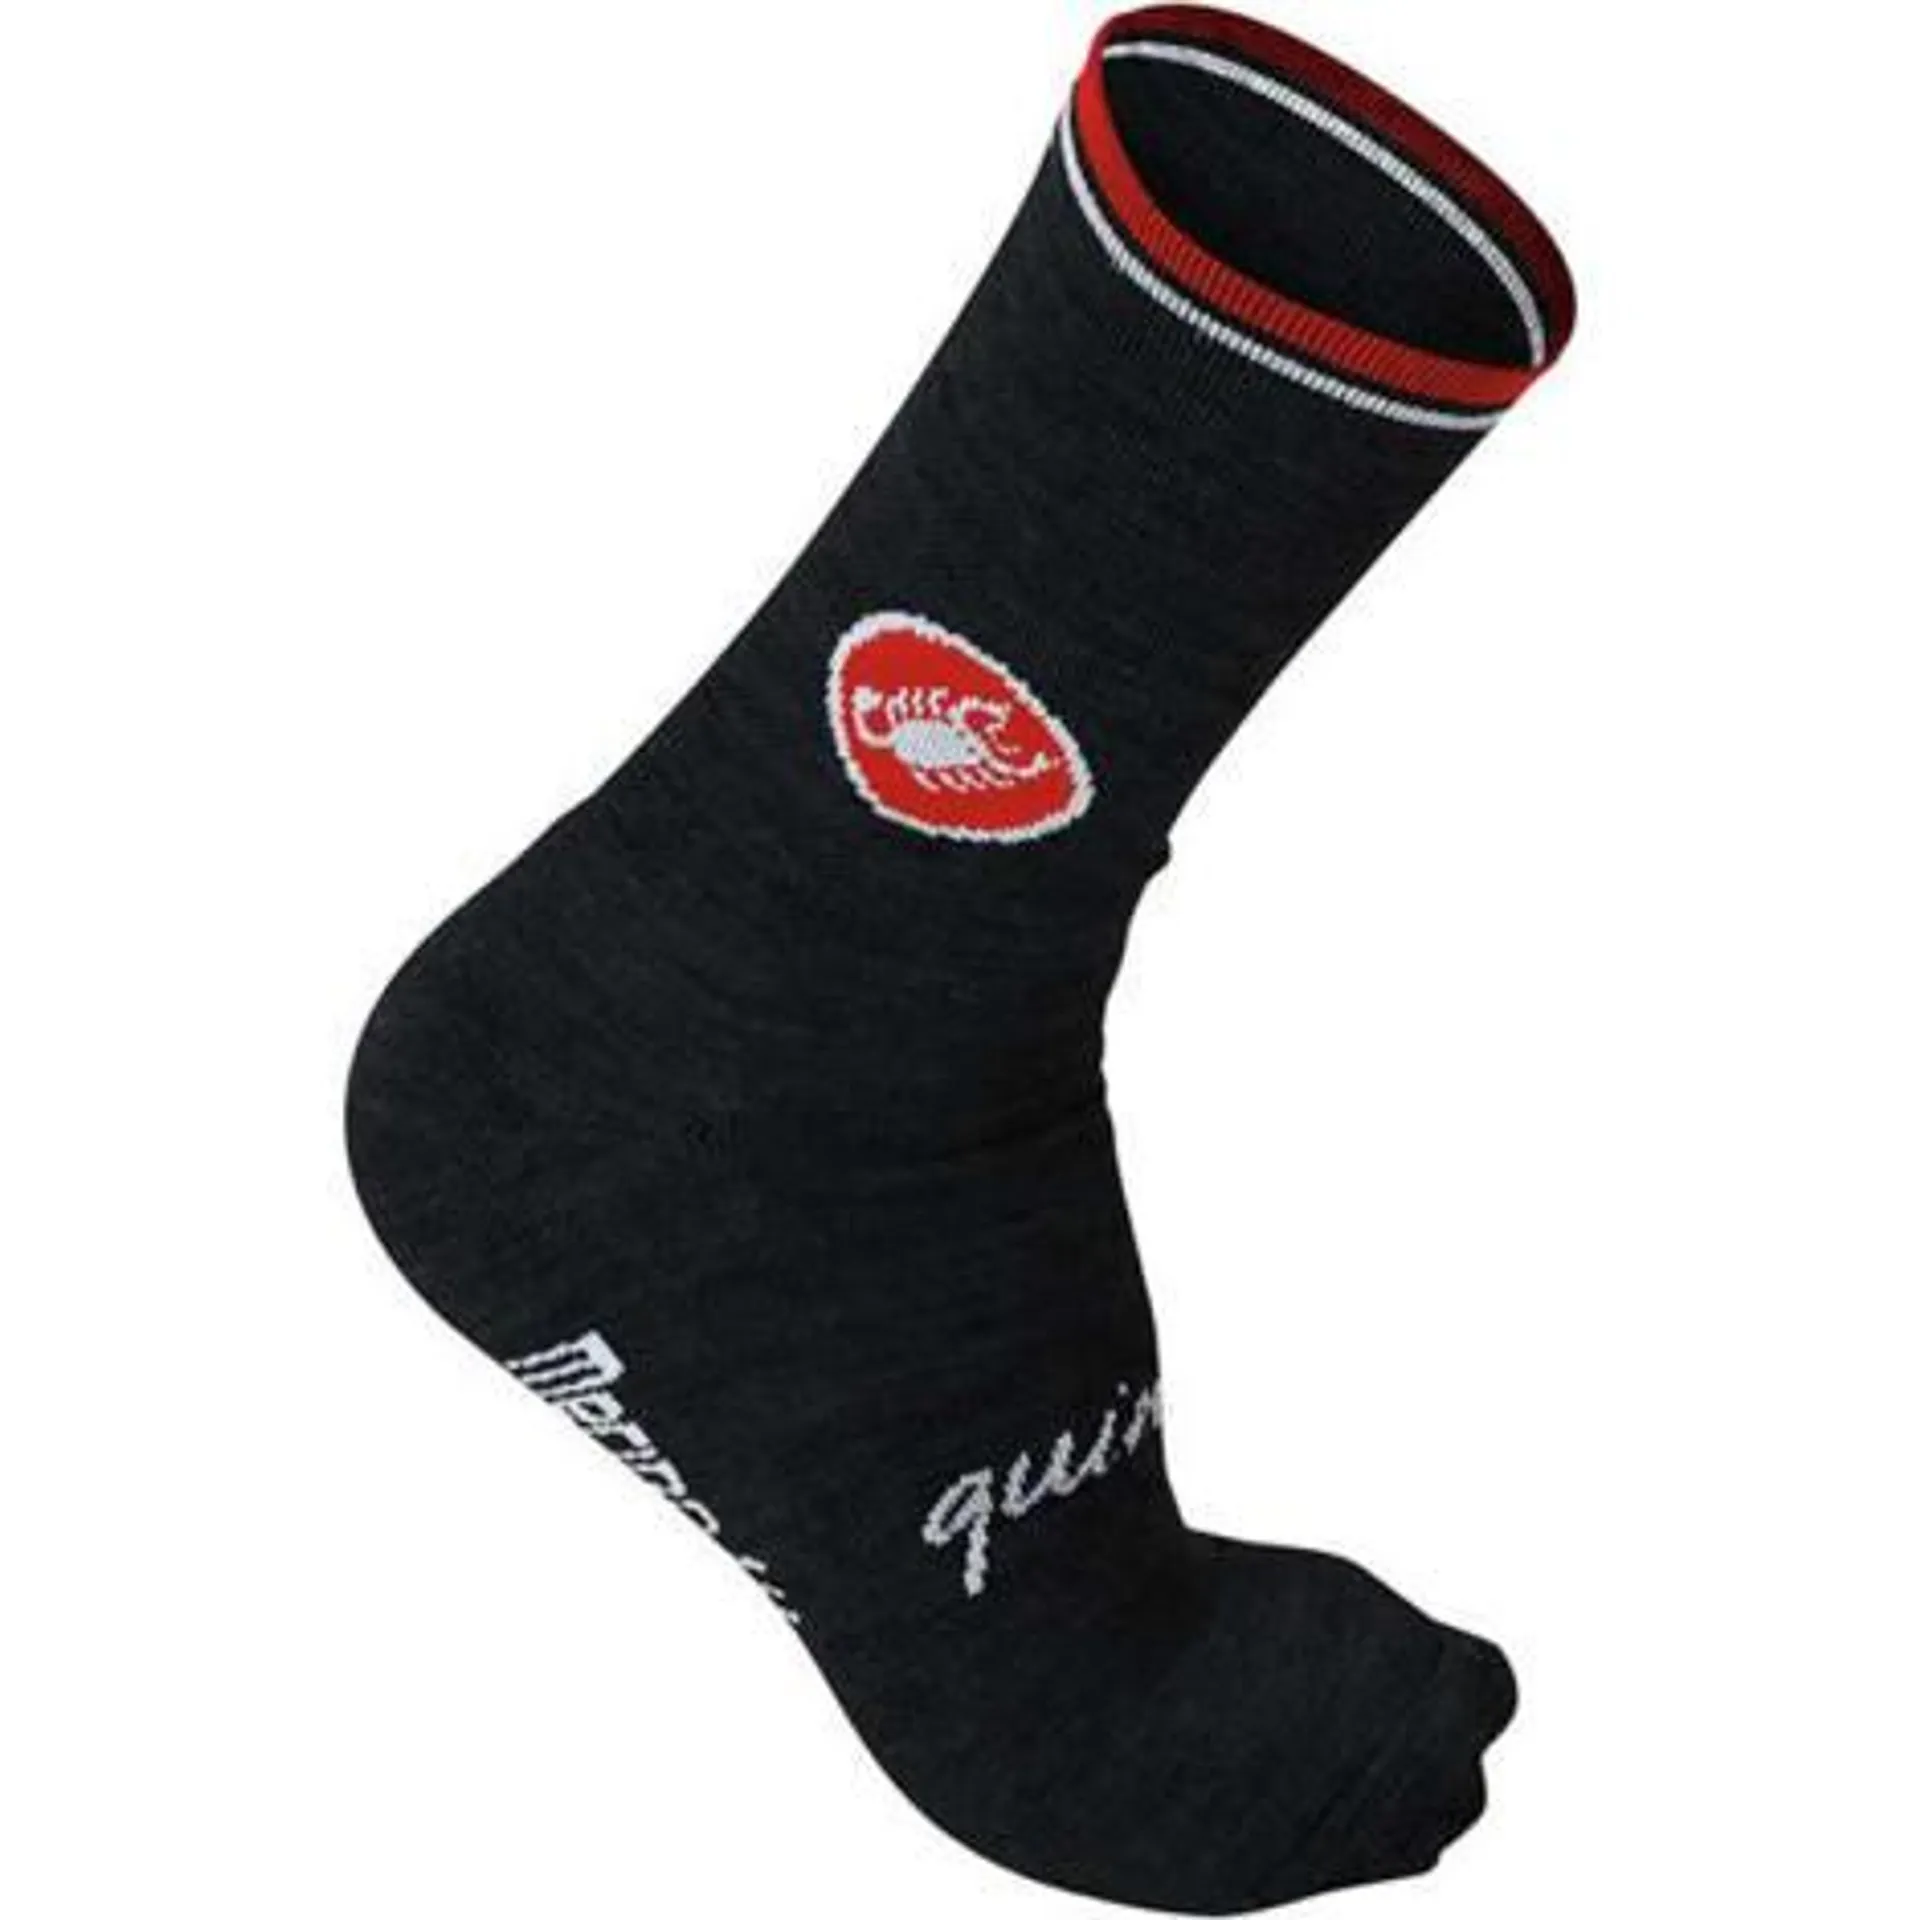 Castelli Quindici Soft Socks - AW21